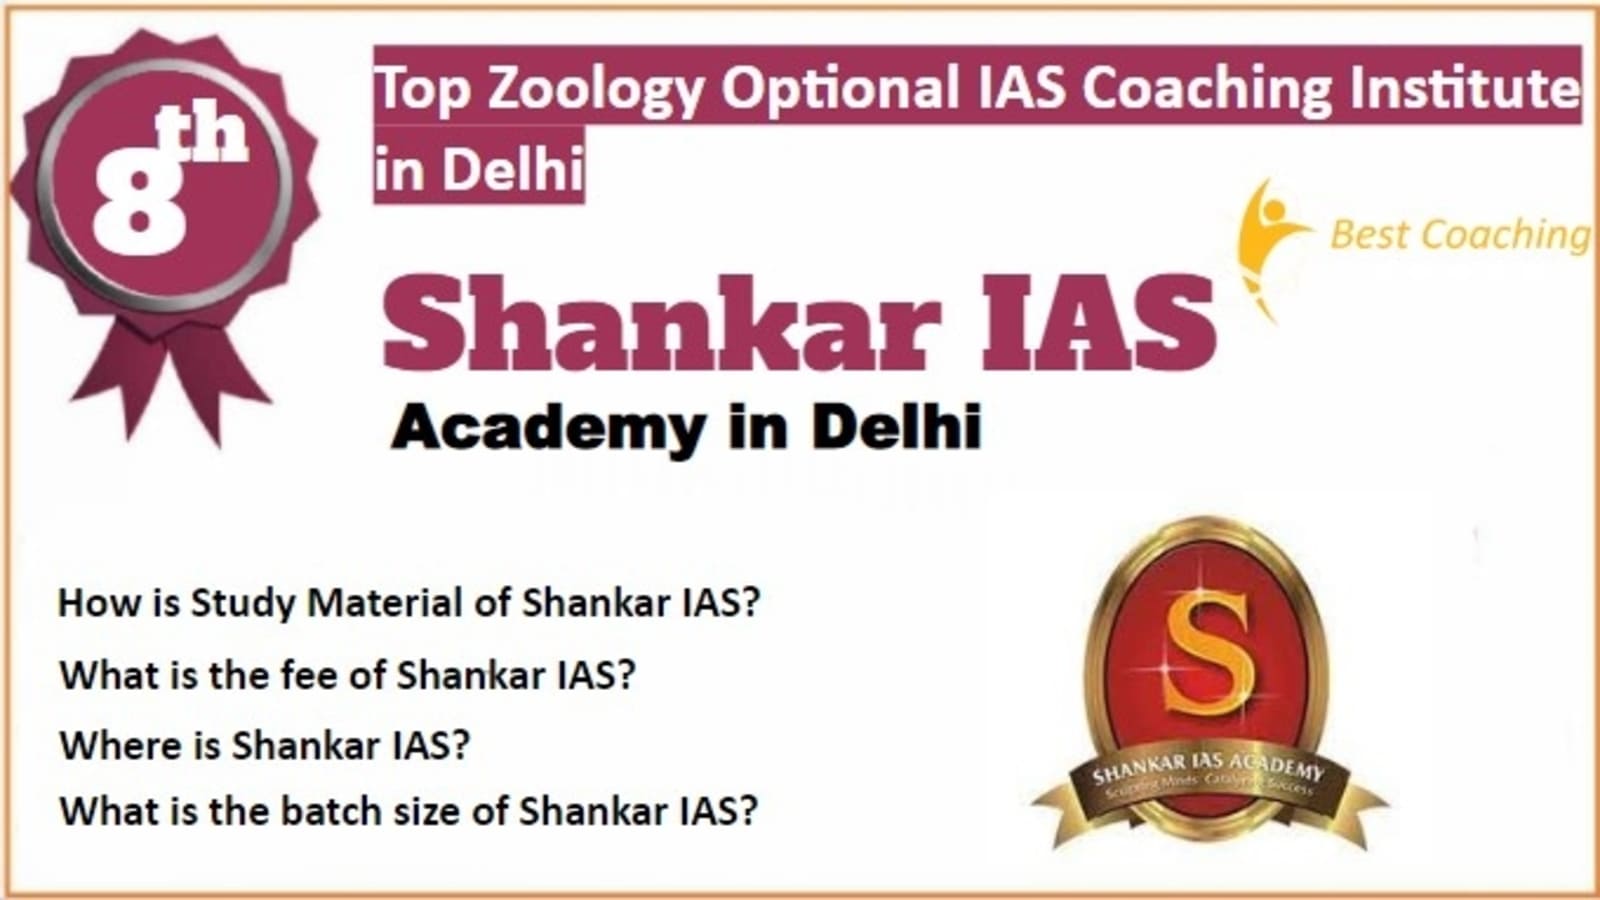 Rank 8 Best Zoology Optional IAS Coaching in Delhi